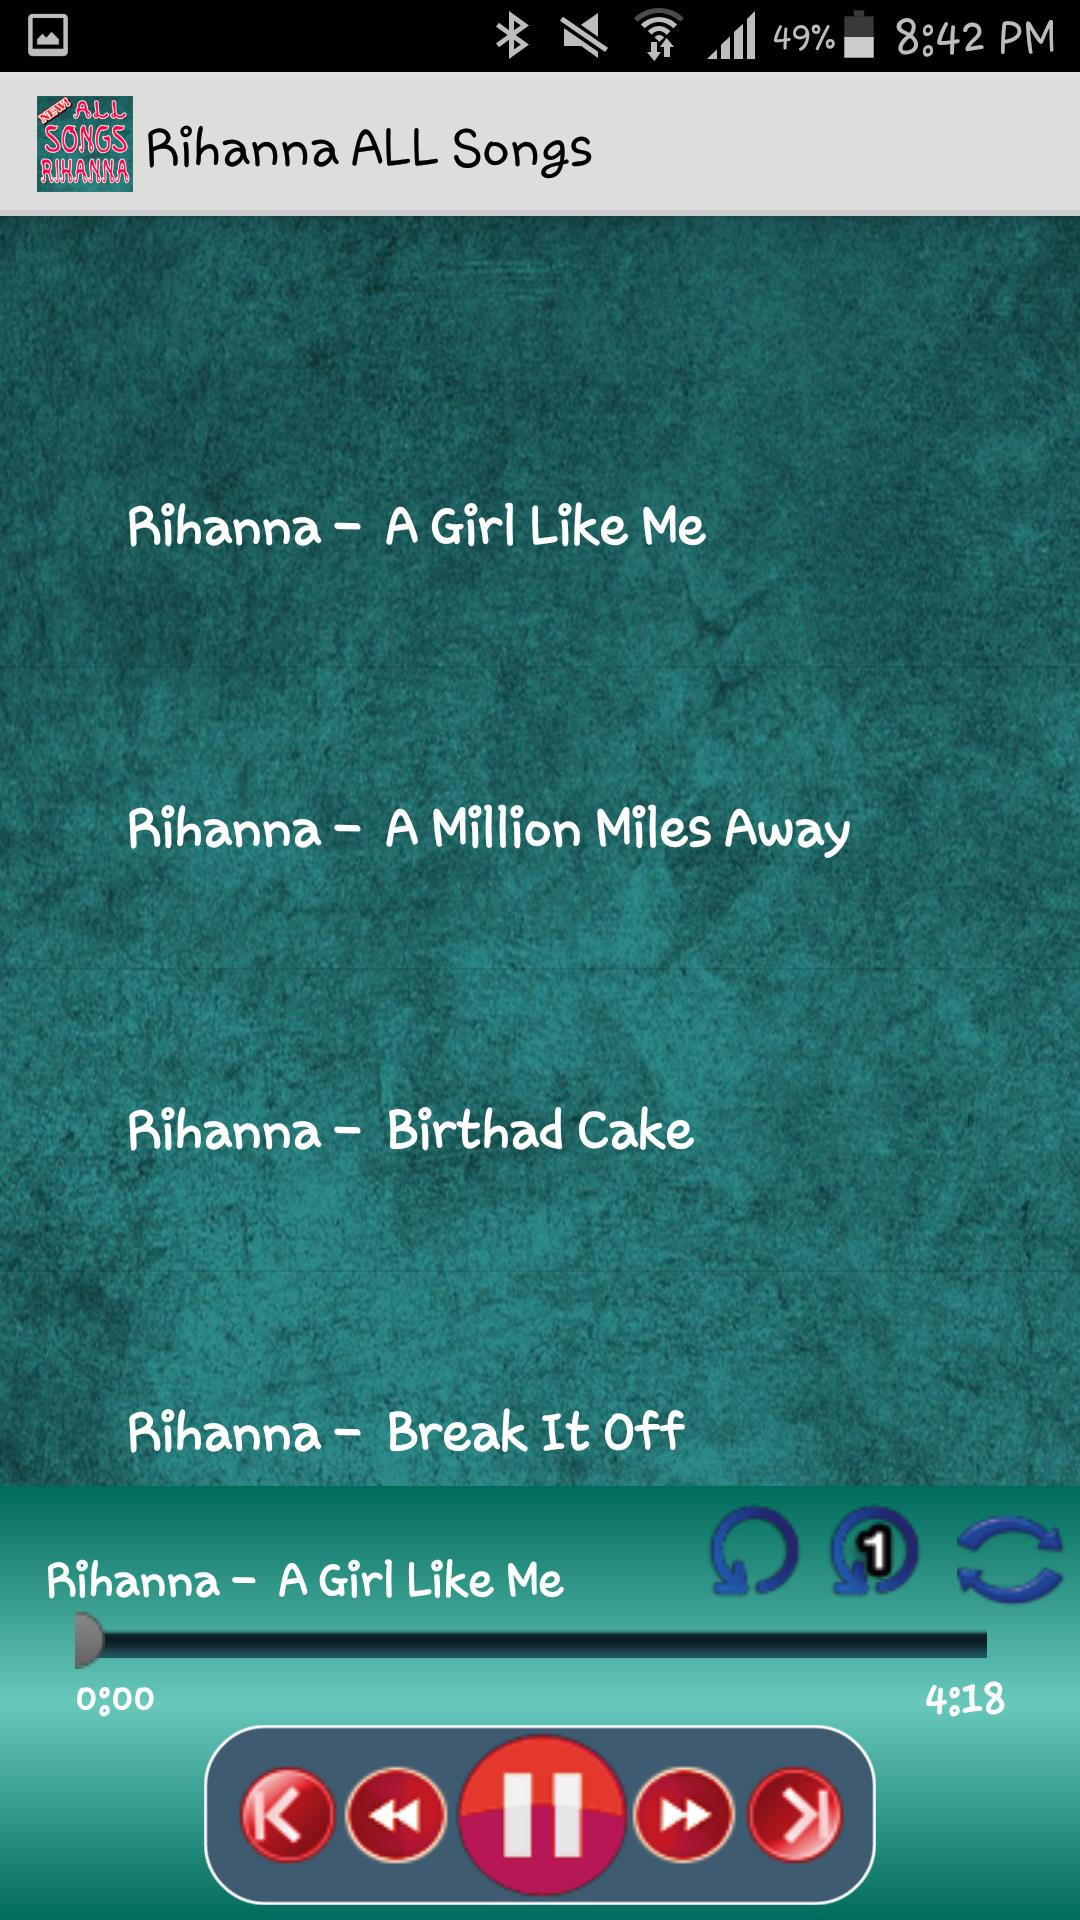 Rihanna Birthday Cake Download
 Rihanna Birthday Cake Song Free Download Rihanna Age Albums